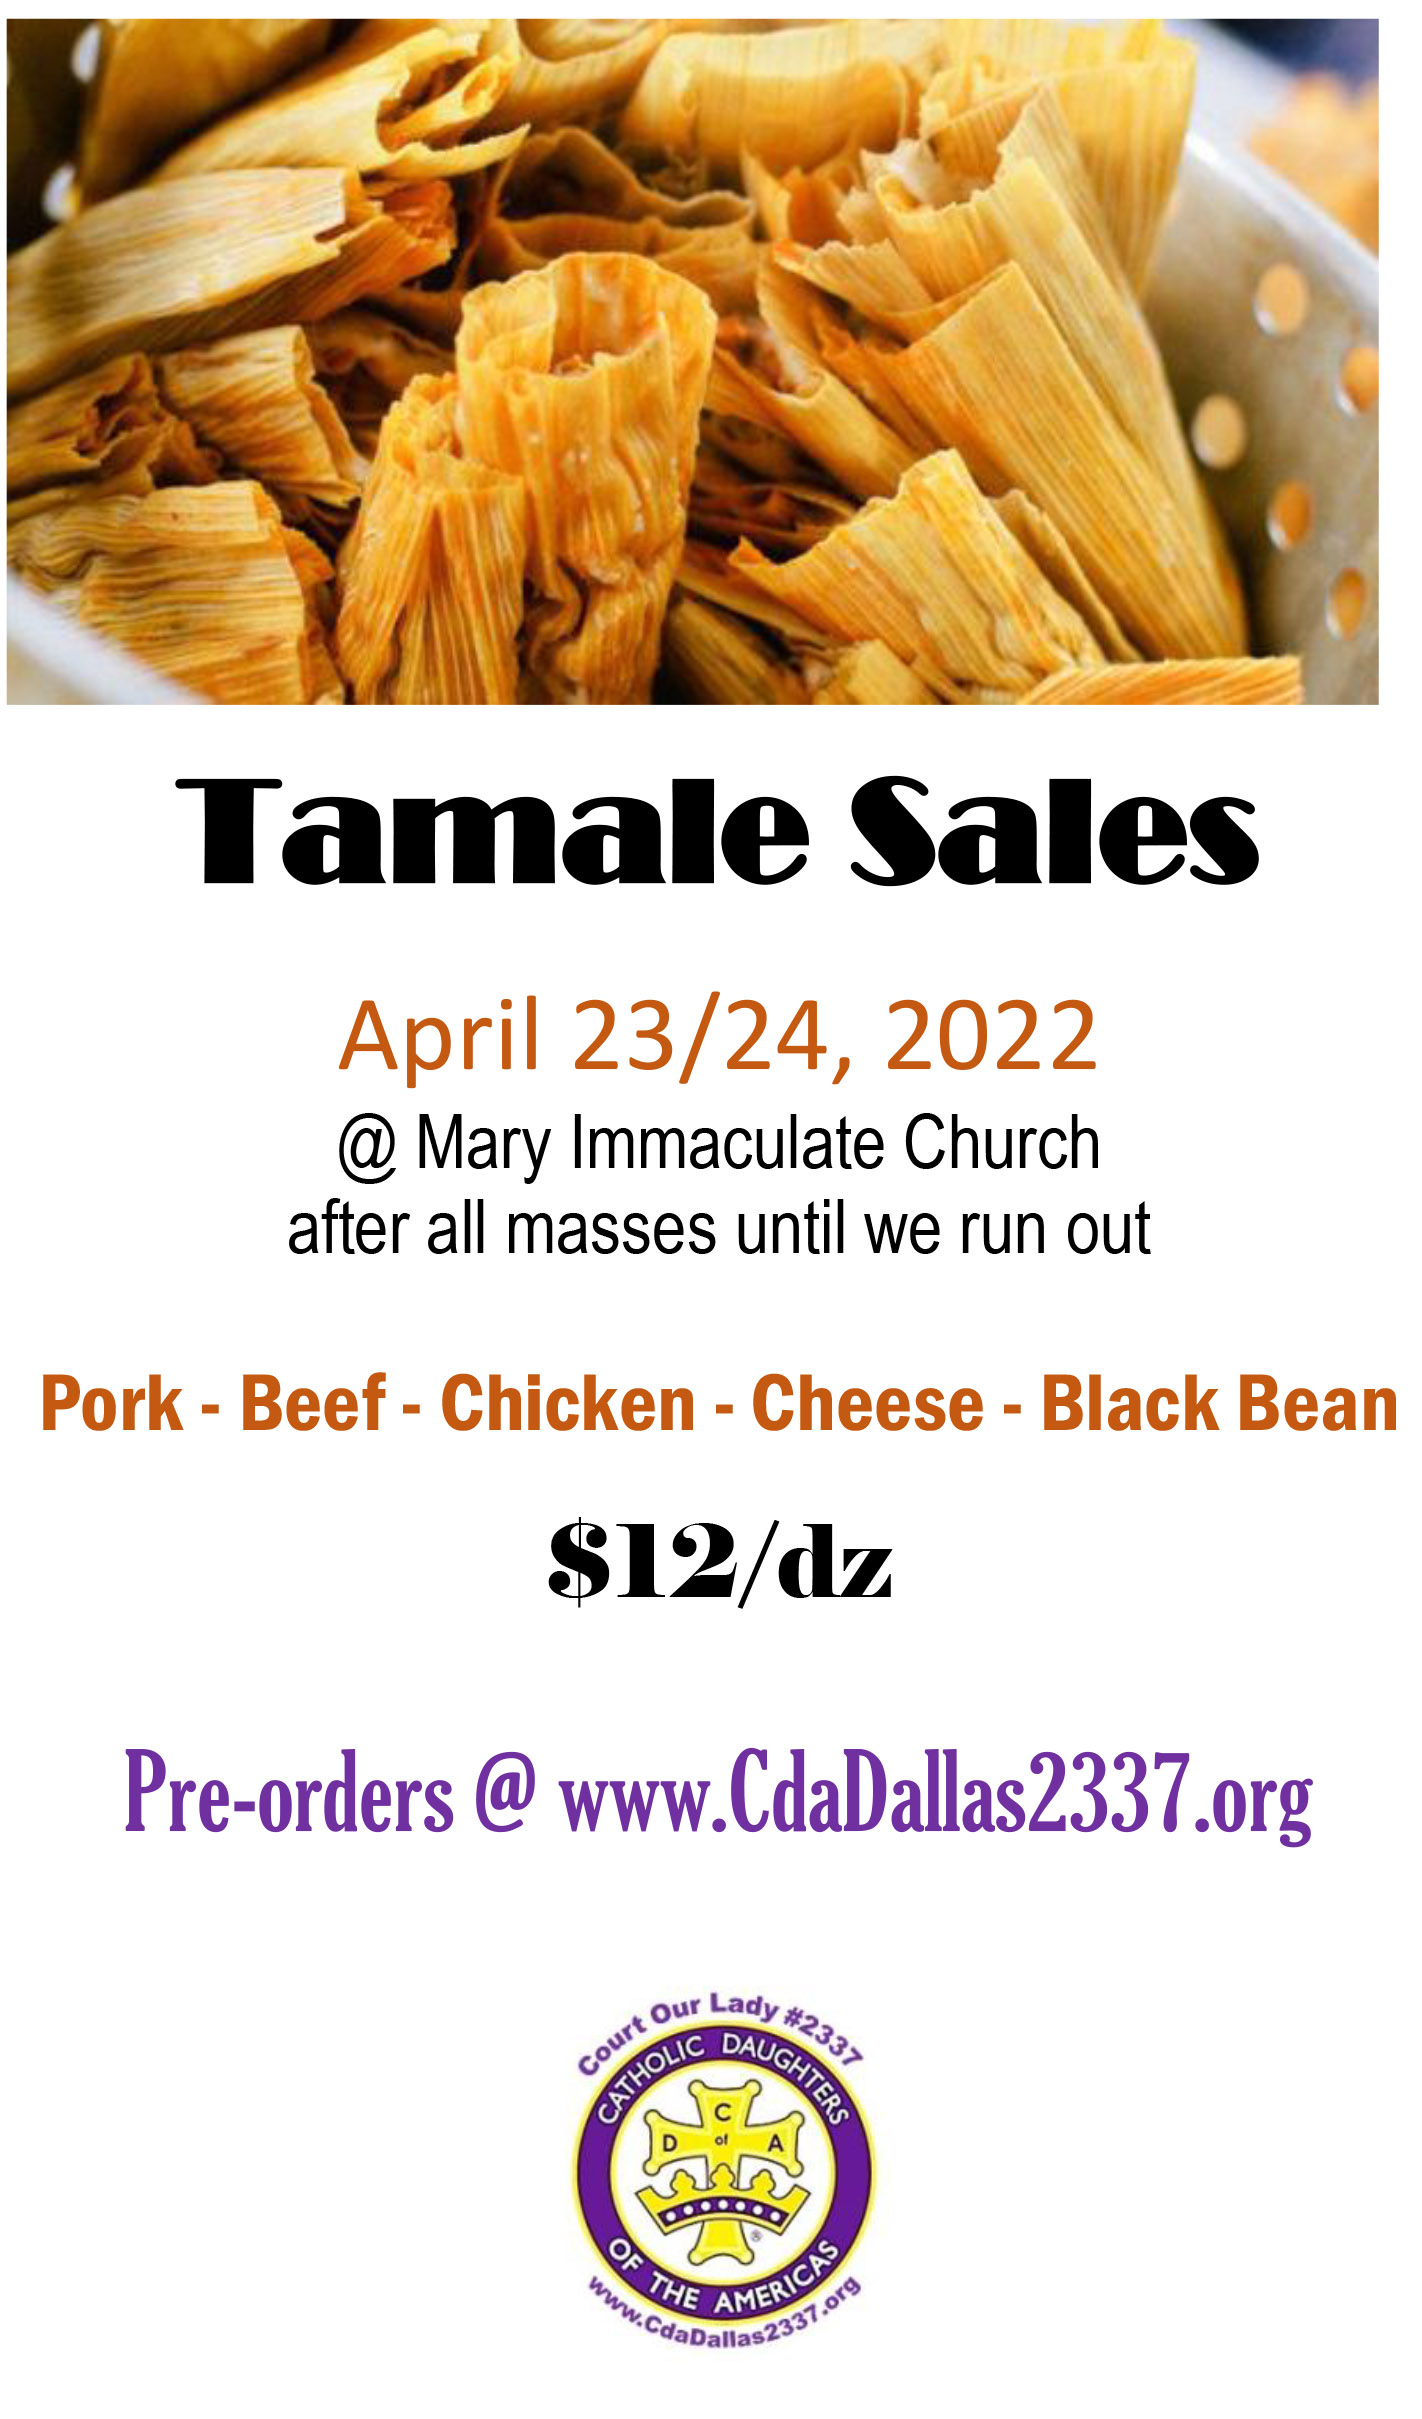 CDA 2337 Tamale Sales